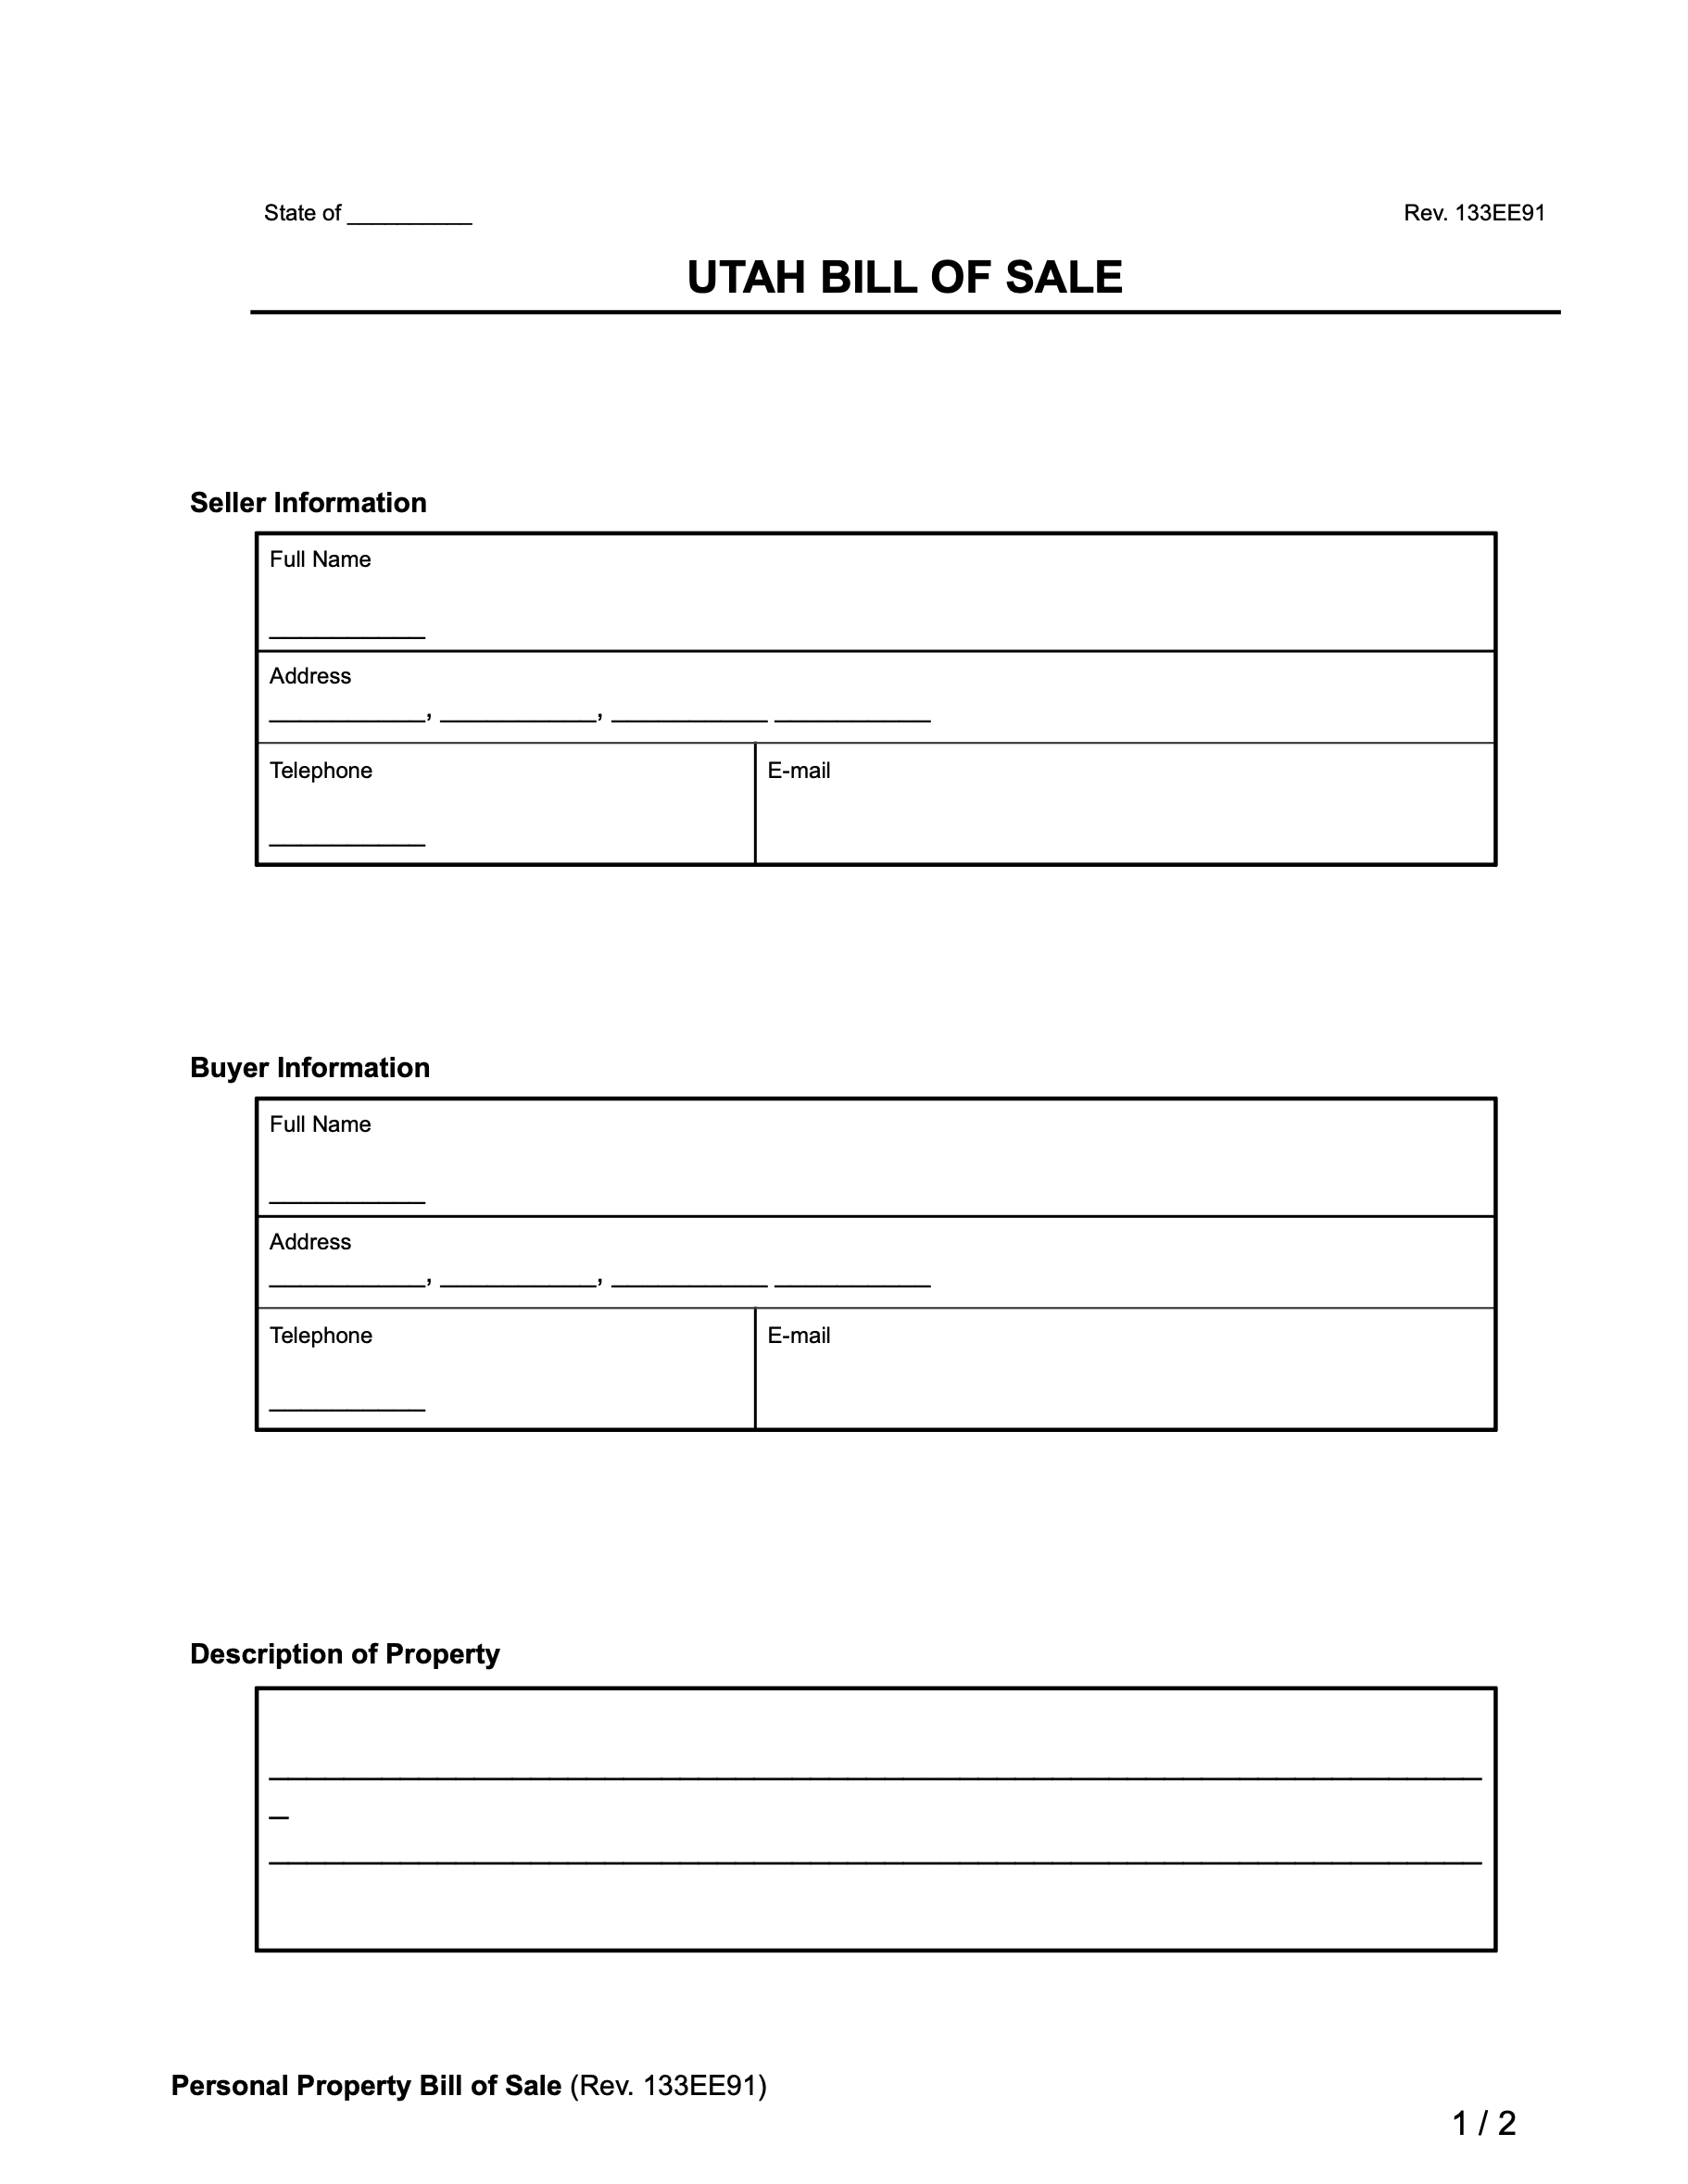 Utah Bill of Sale Form